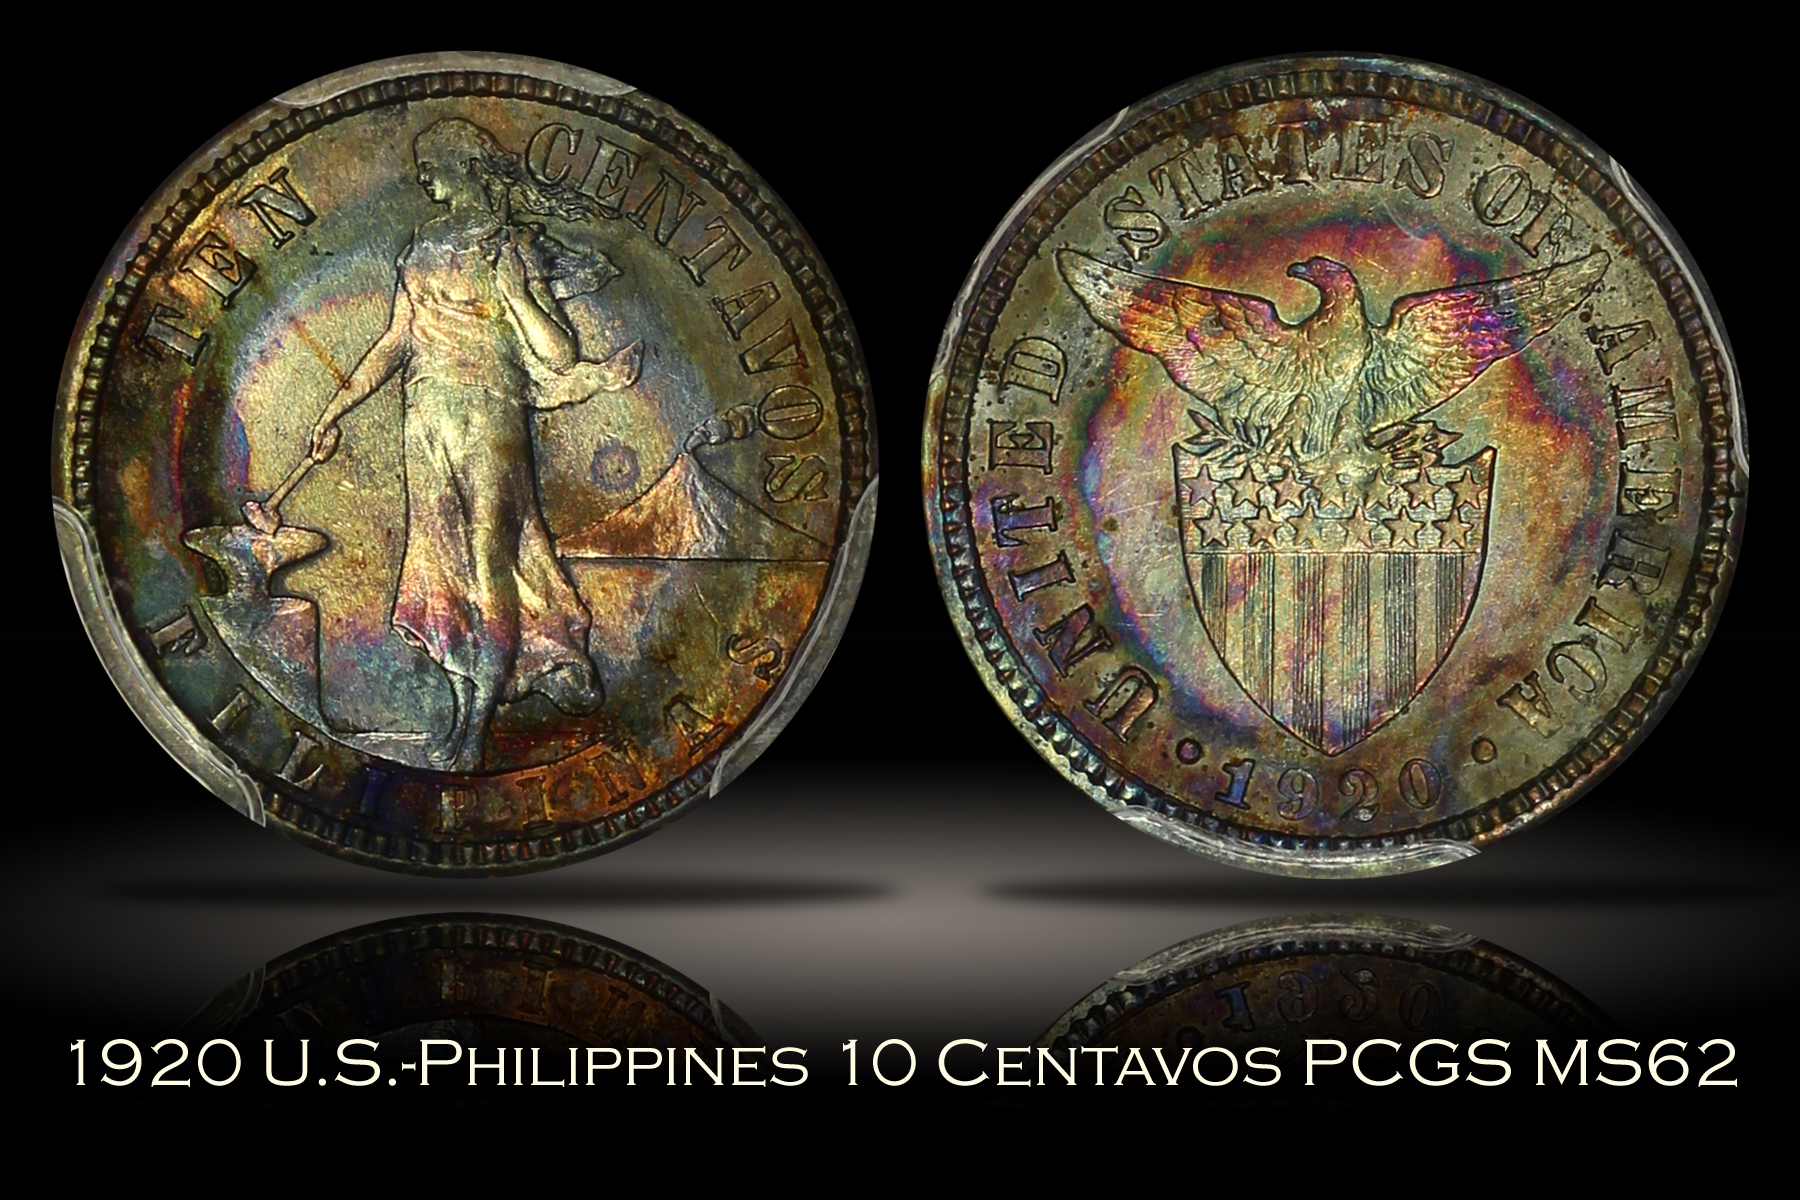 1920 U.S.-Philippines 10 Centavos PCGS MS62